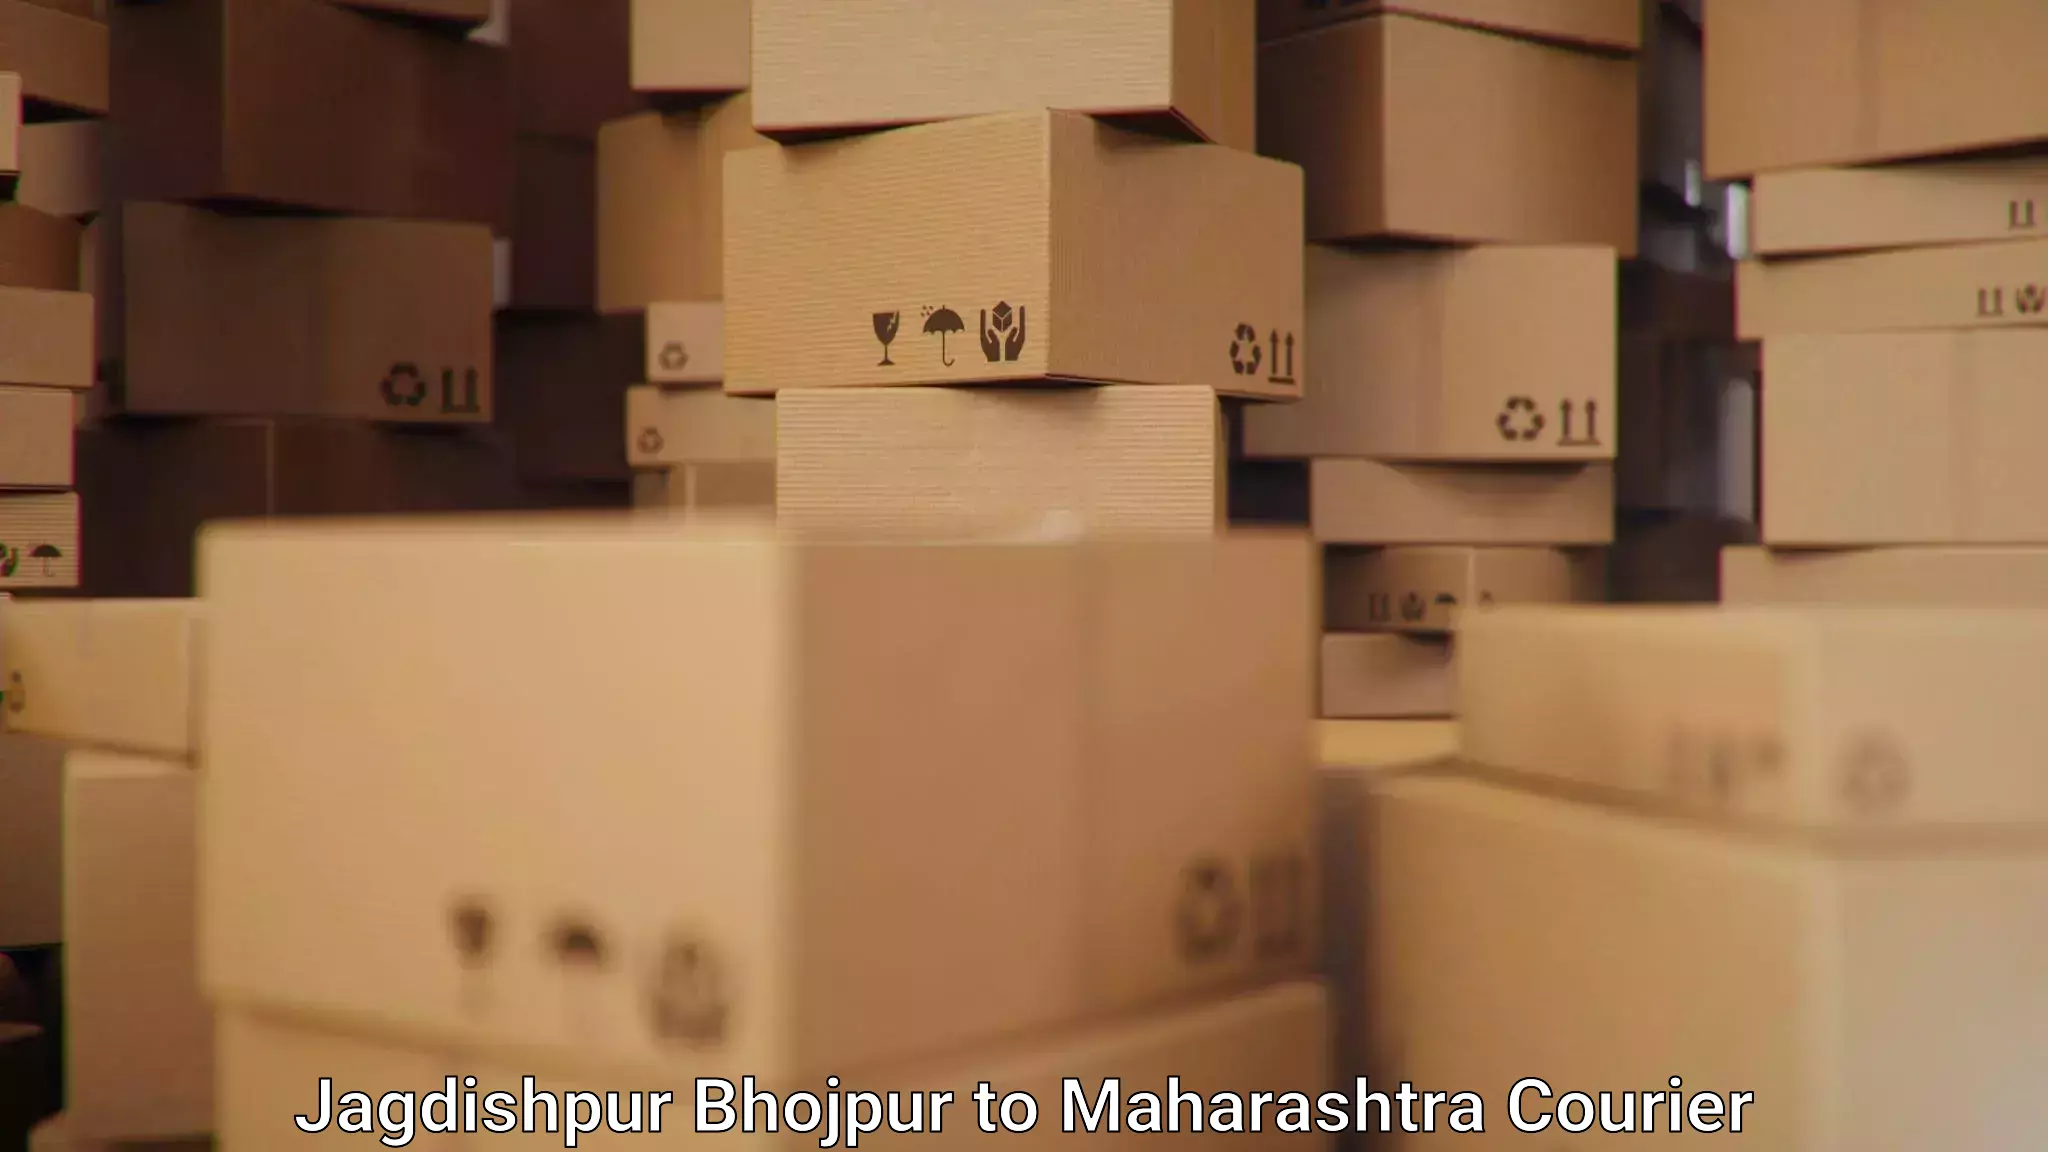 Specialized shipment handling Jagdishpur Bhojpur to Yavatmal